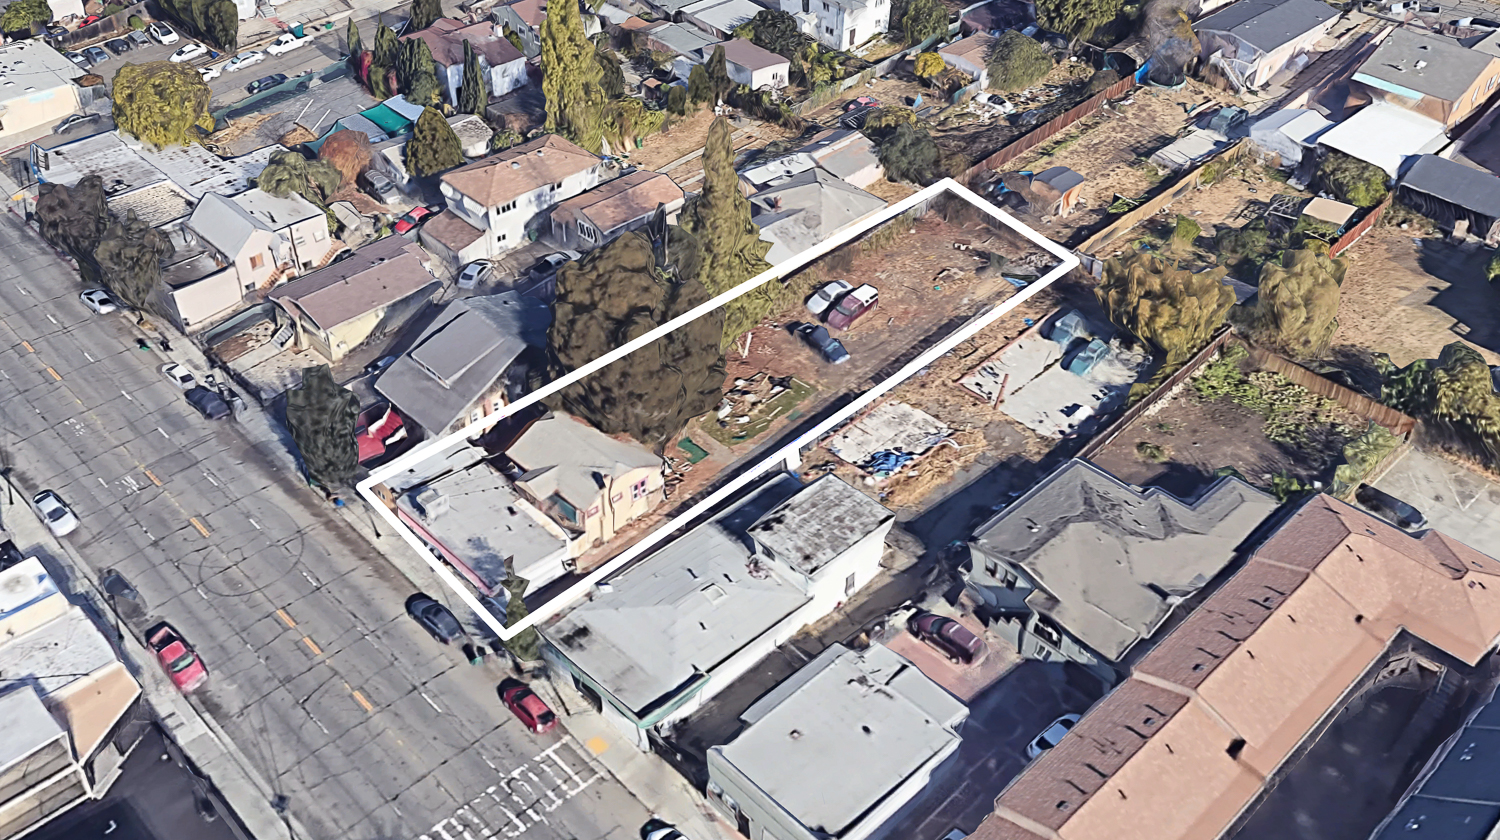 7994 MacArthur Boulevard, image via Google Satellite